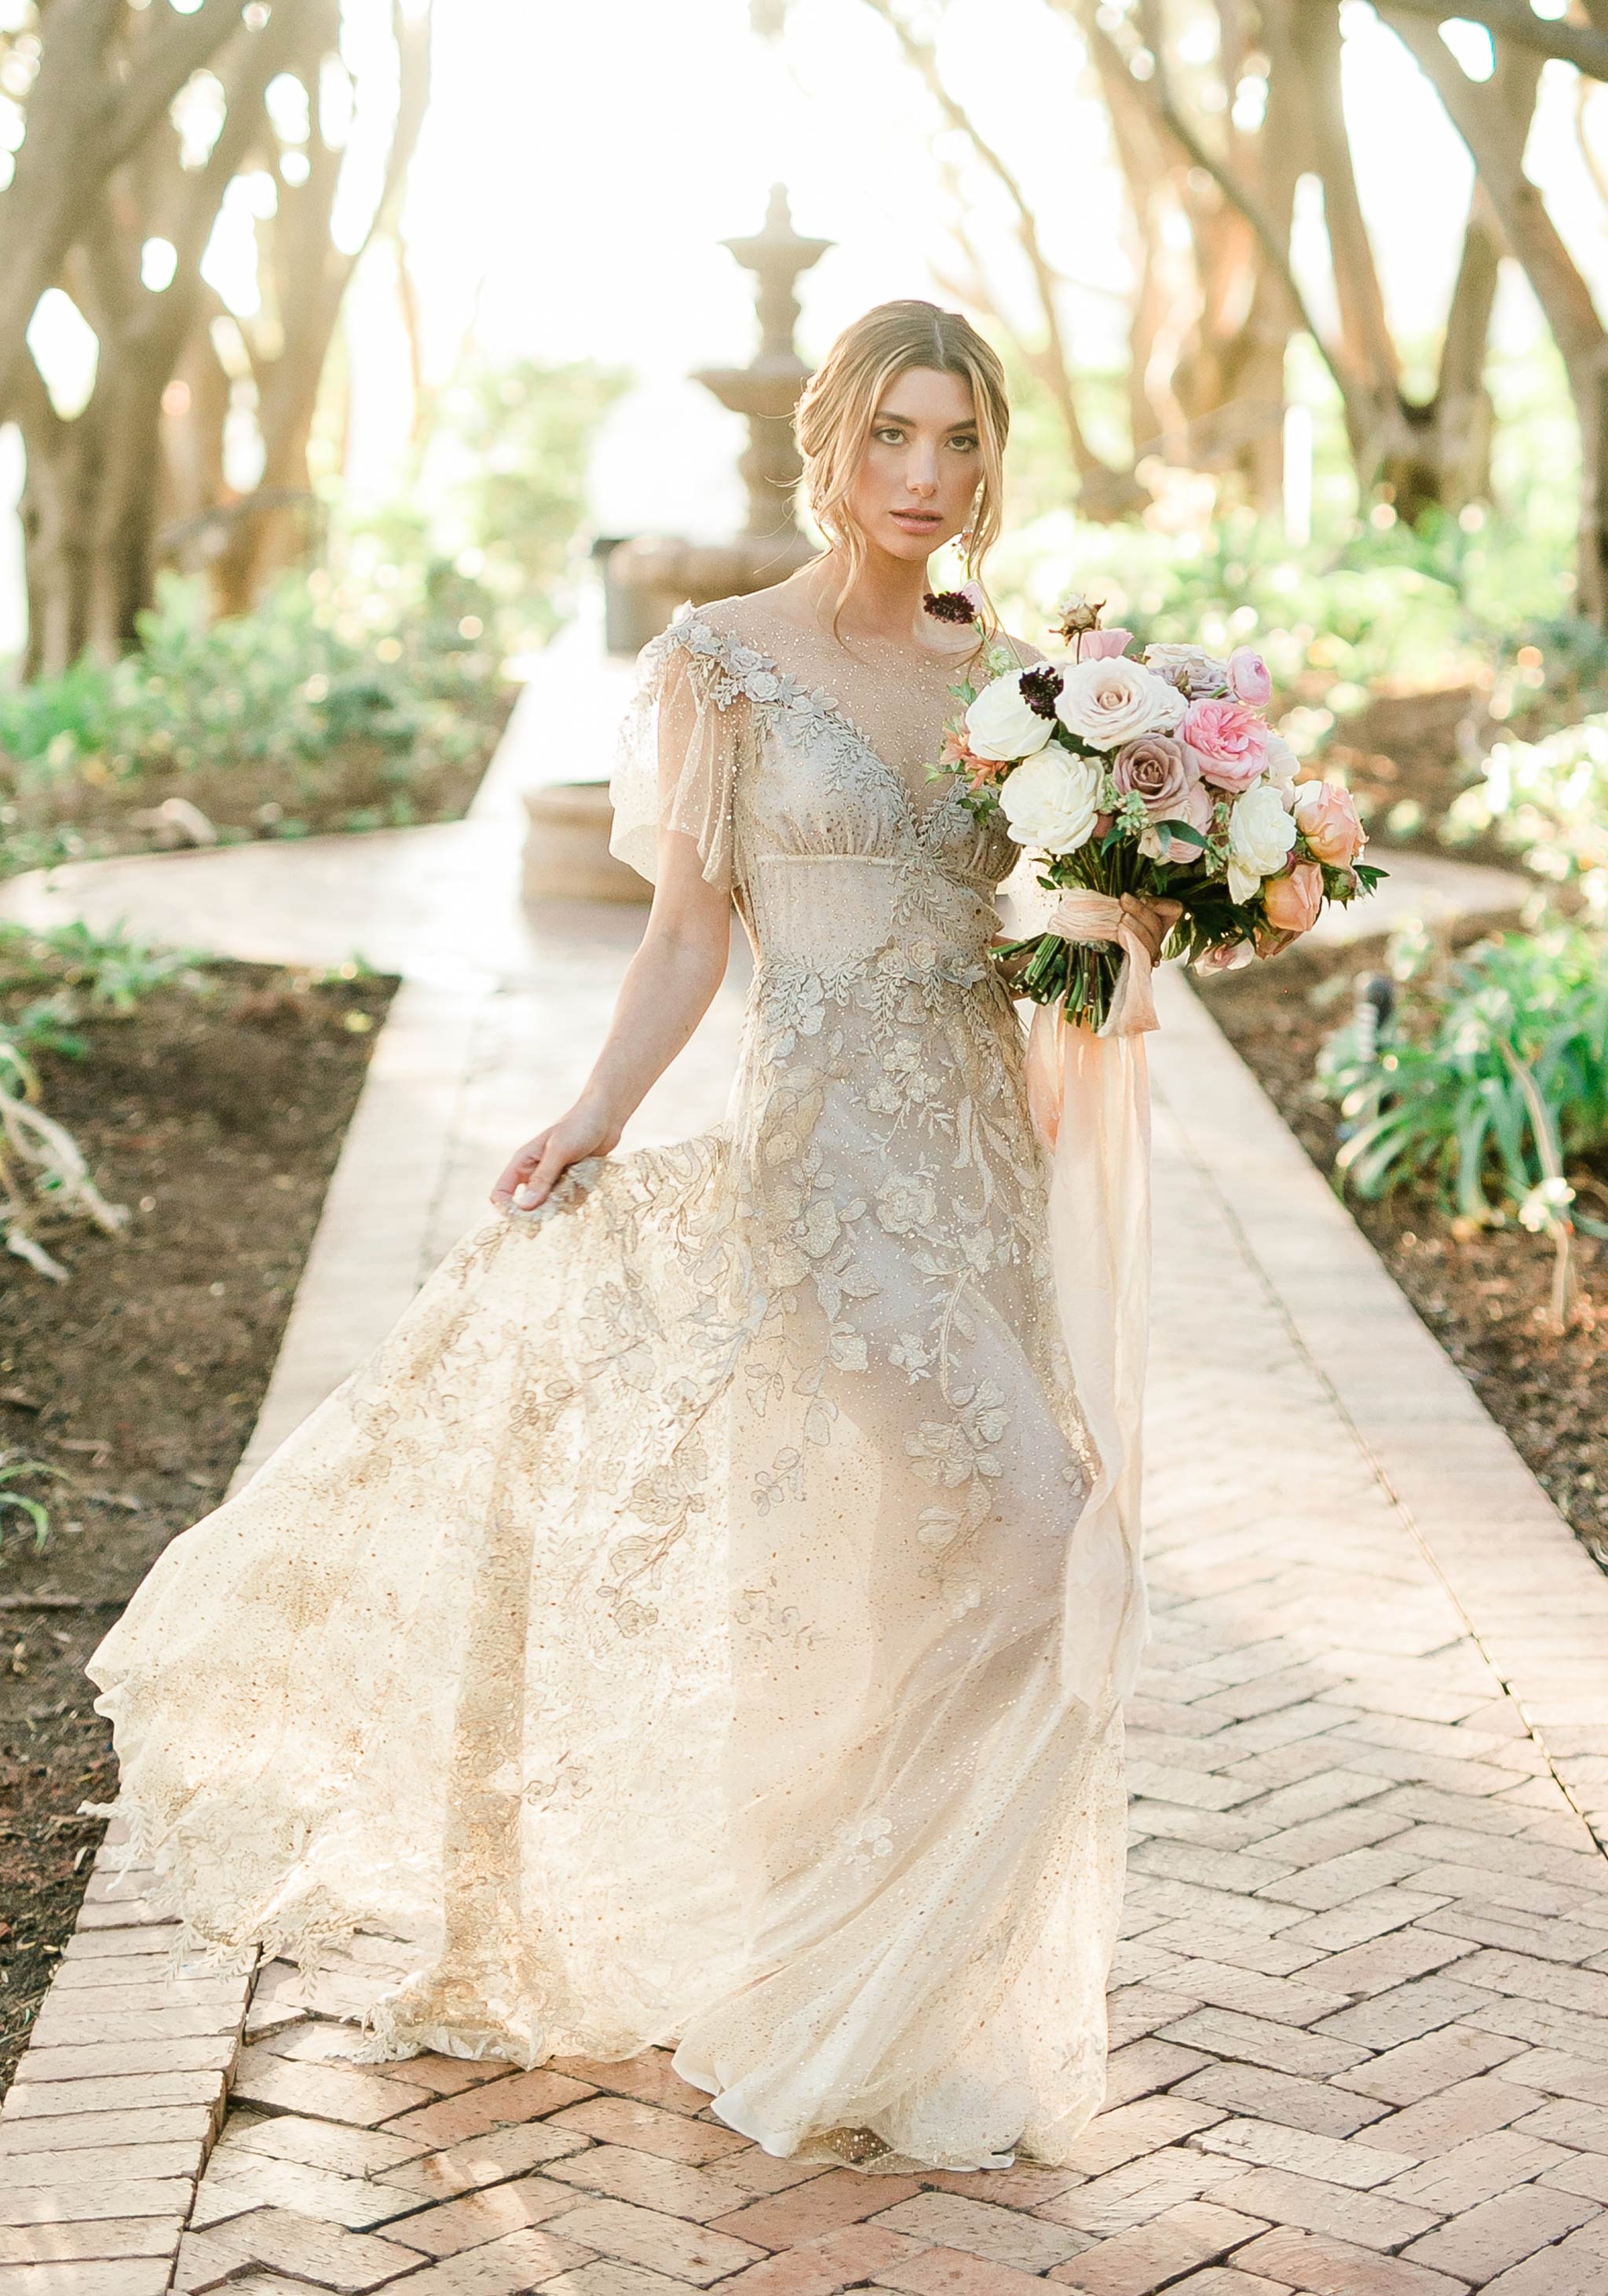 20 Wedding Dresses Under $1,500 | Unique Bridal Gowns Under 1500 Dollars